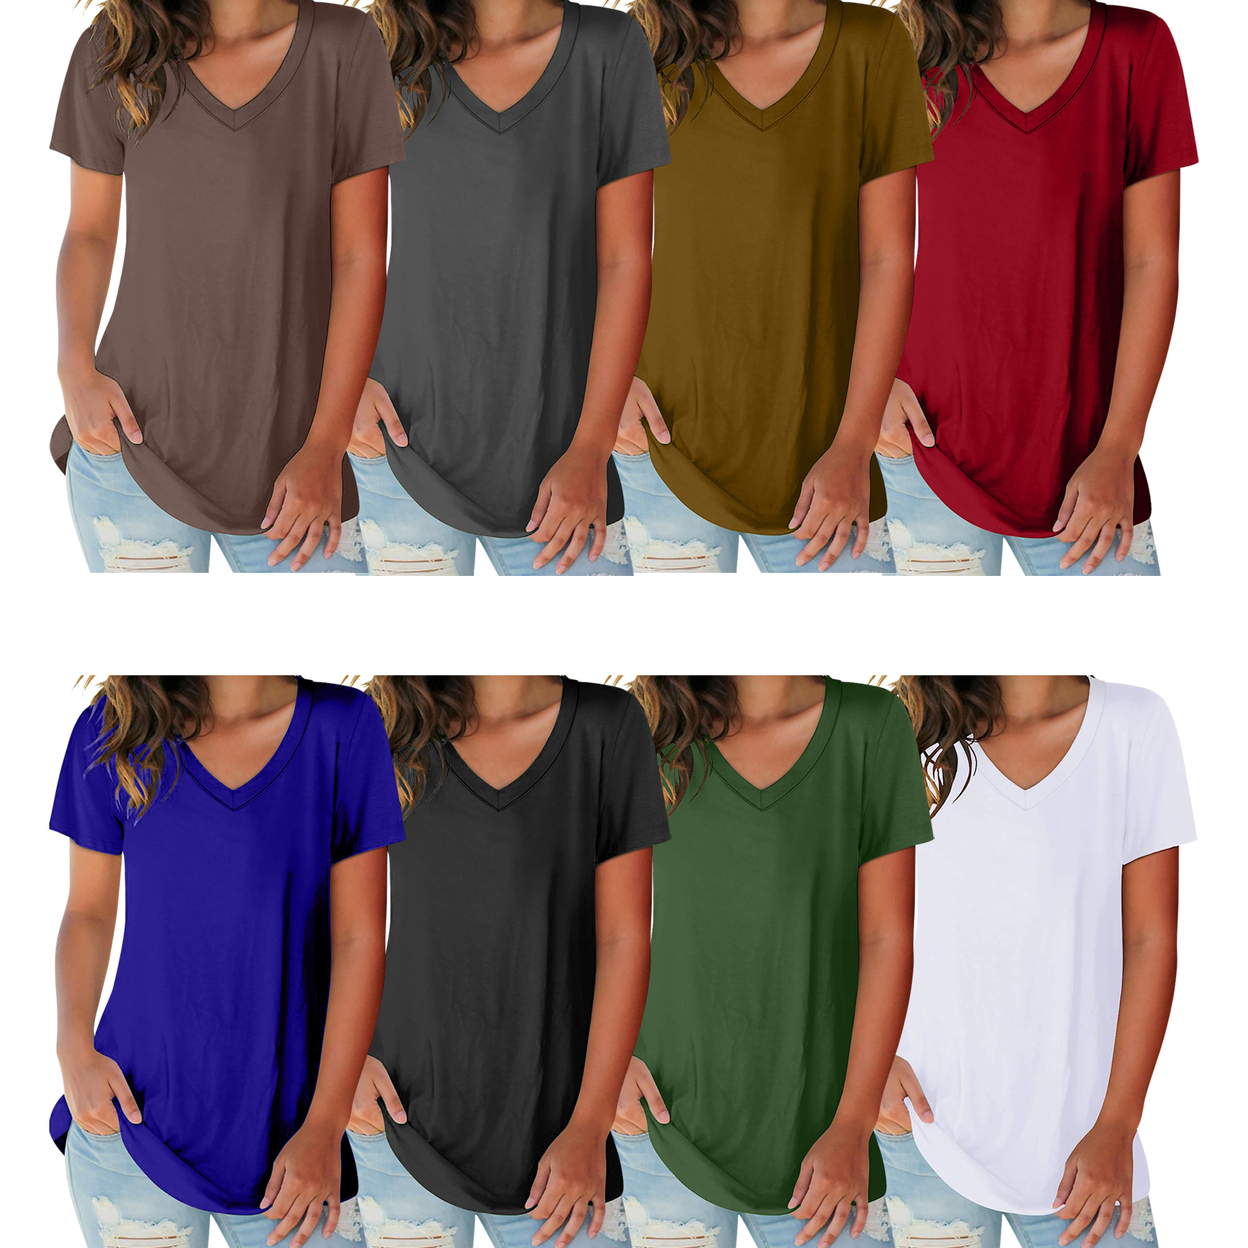 2-Pack: Women's Ultra Soft Smooth Cotton Blend Basic V-Neck Short Sleeve Shirts - Navy & Brown, Medium